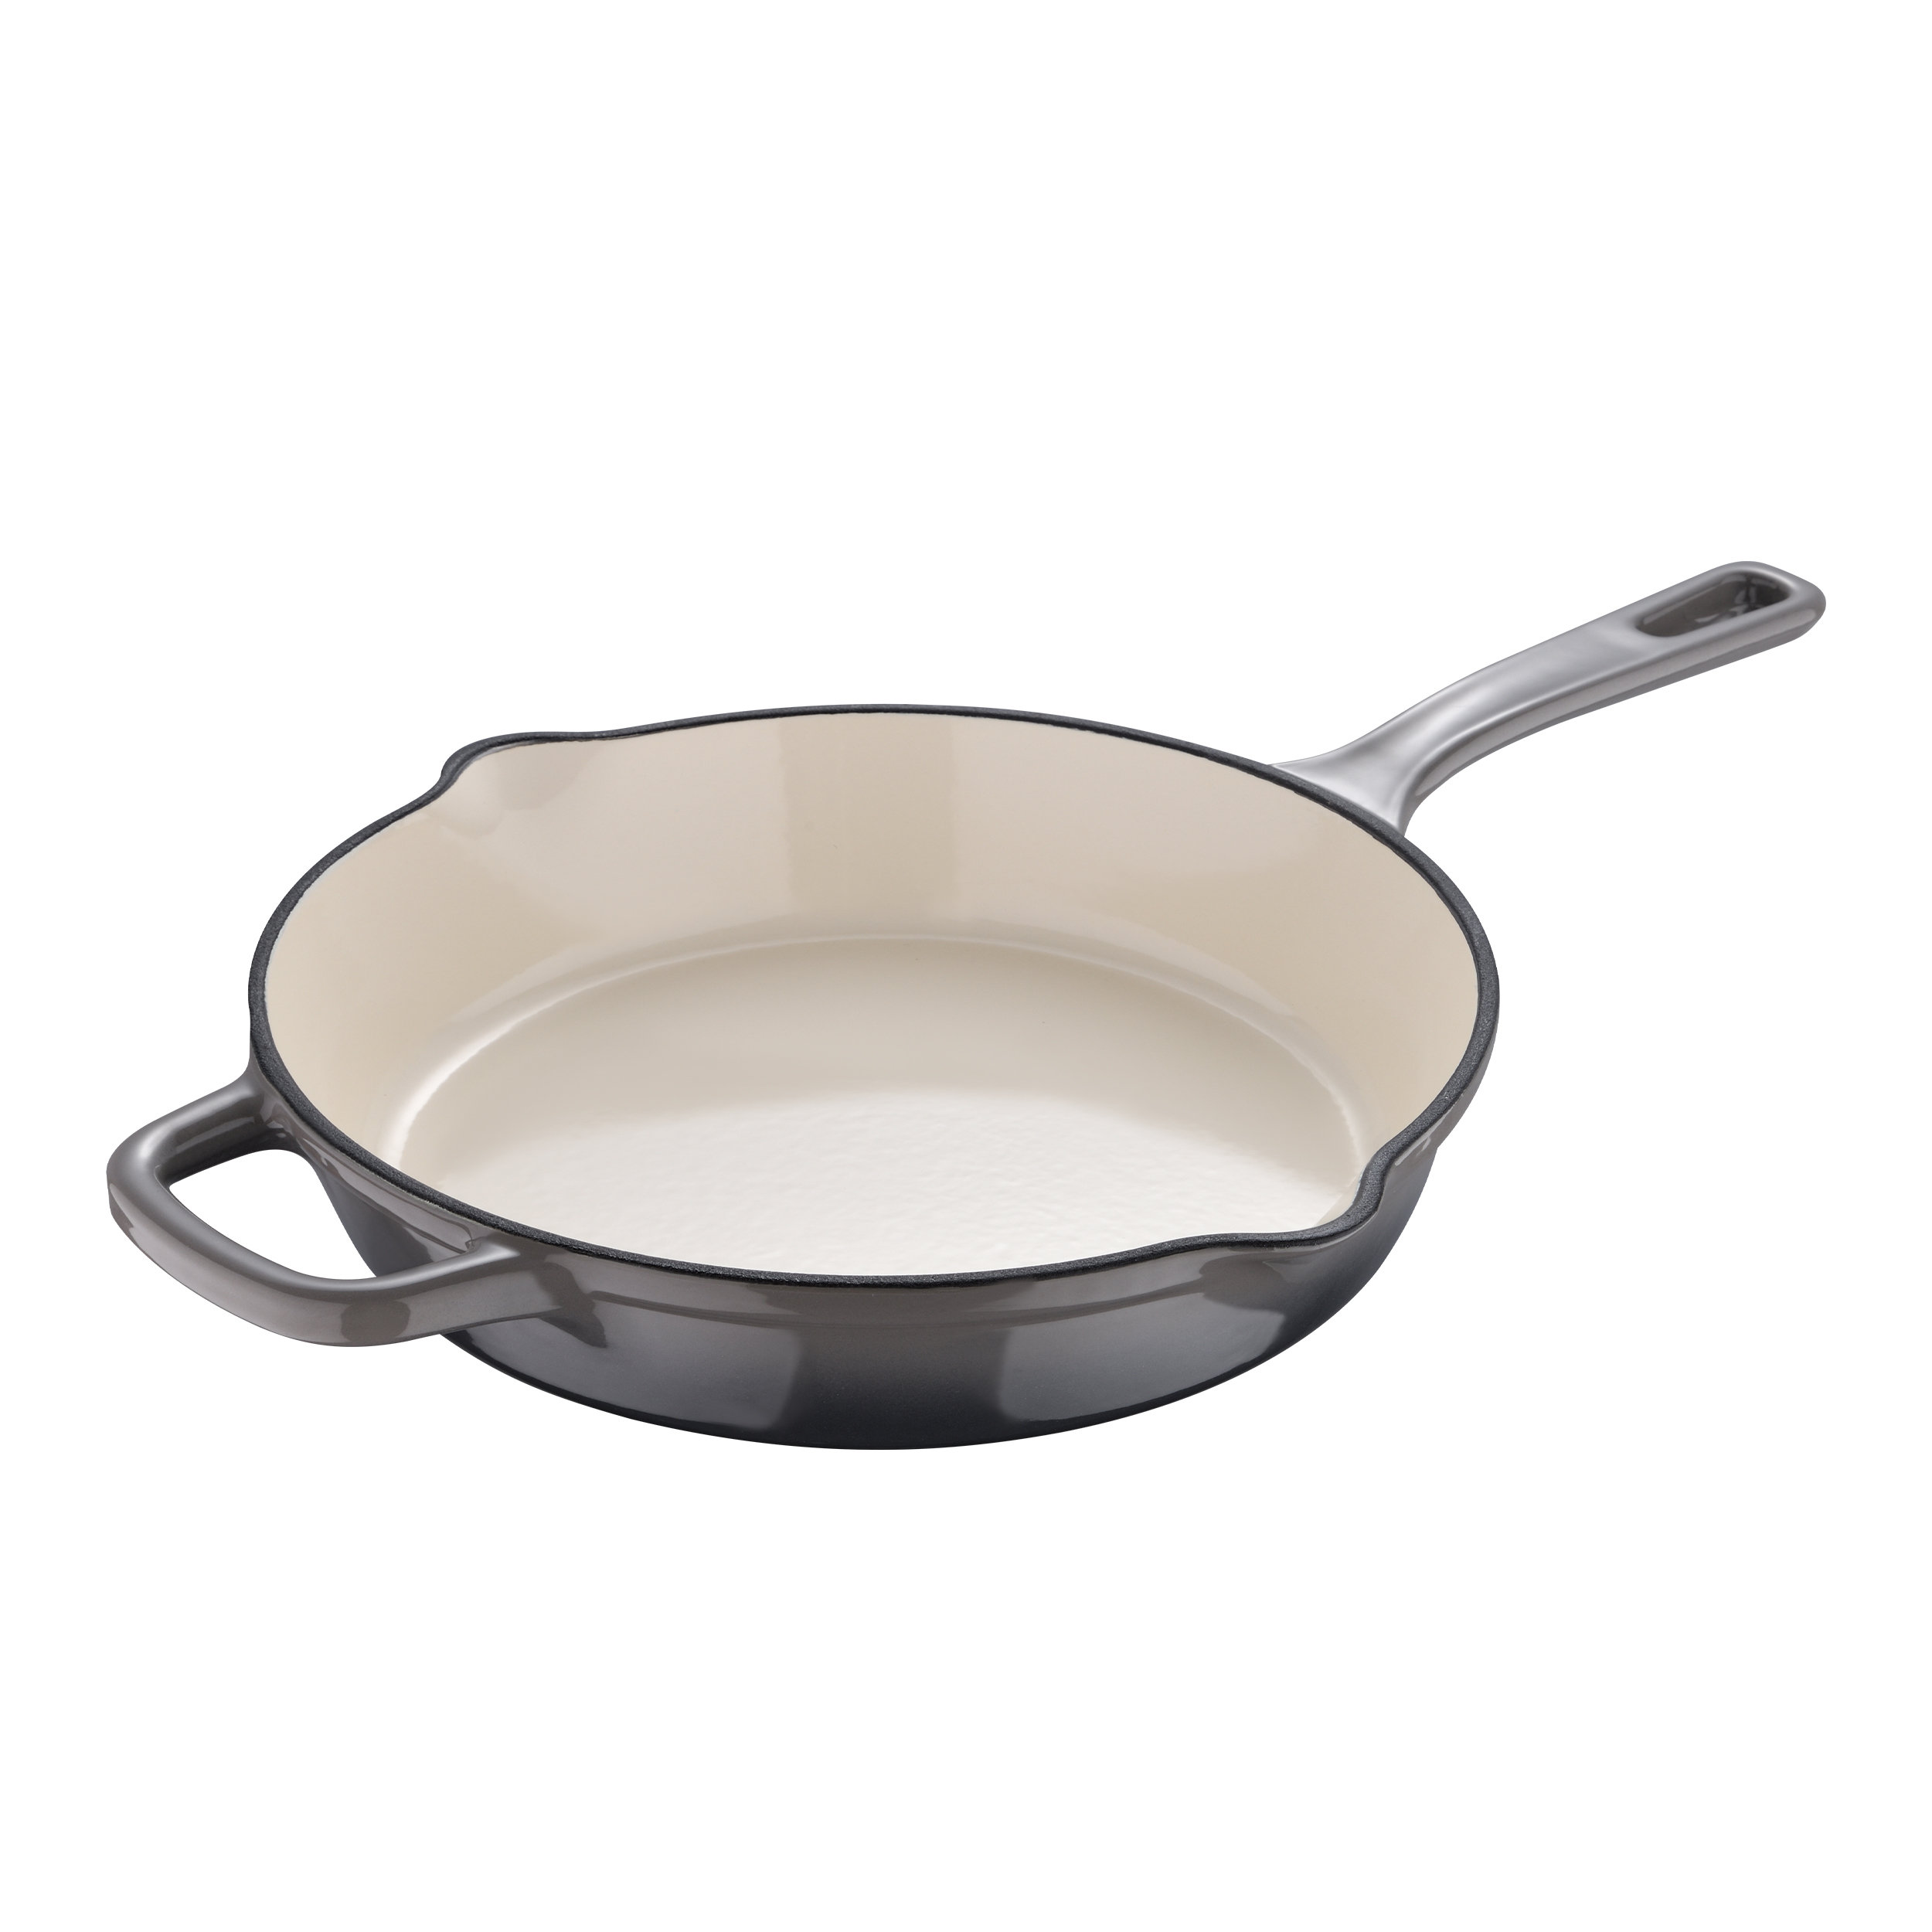 Eternal Cookware 10 inch Enameled Cast Iron Fry Pan Pg00183